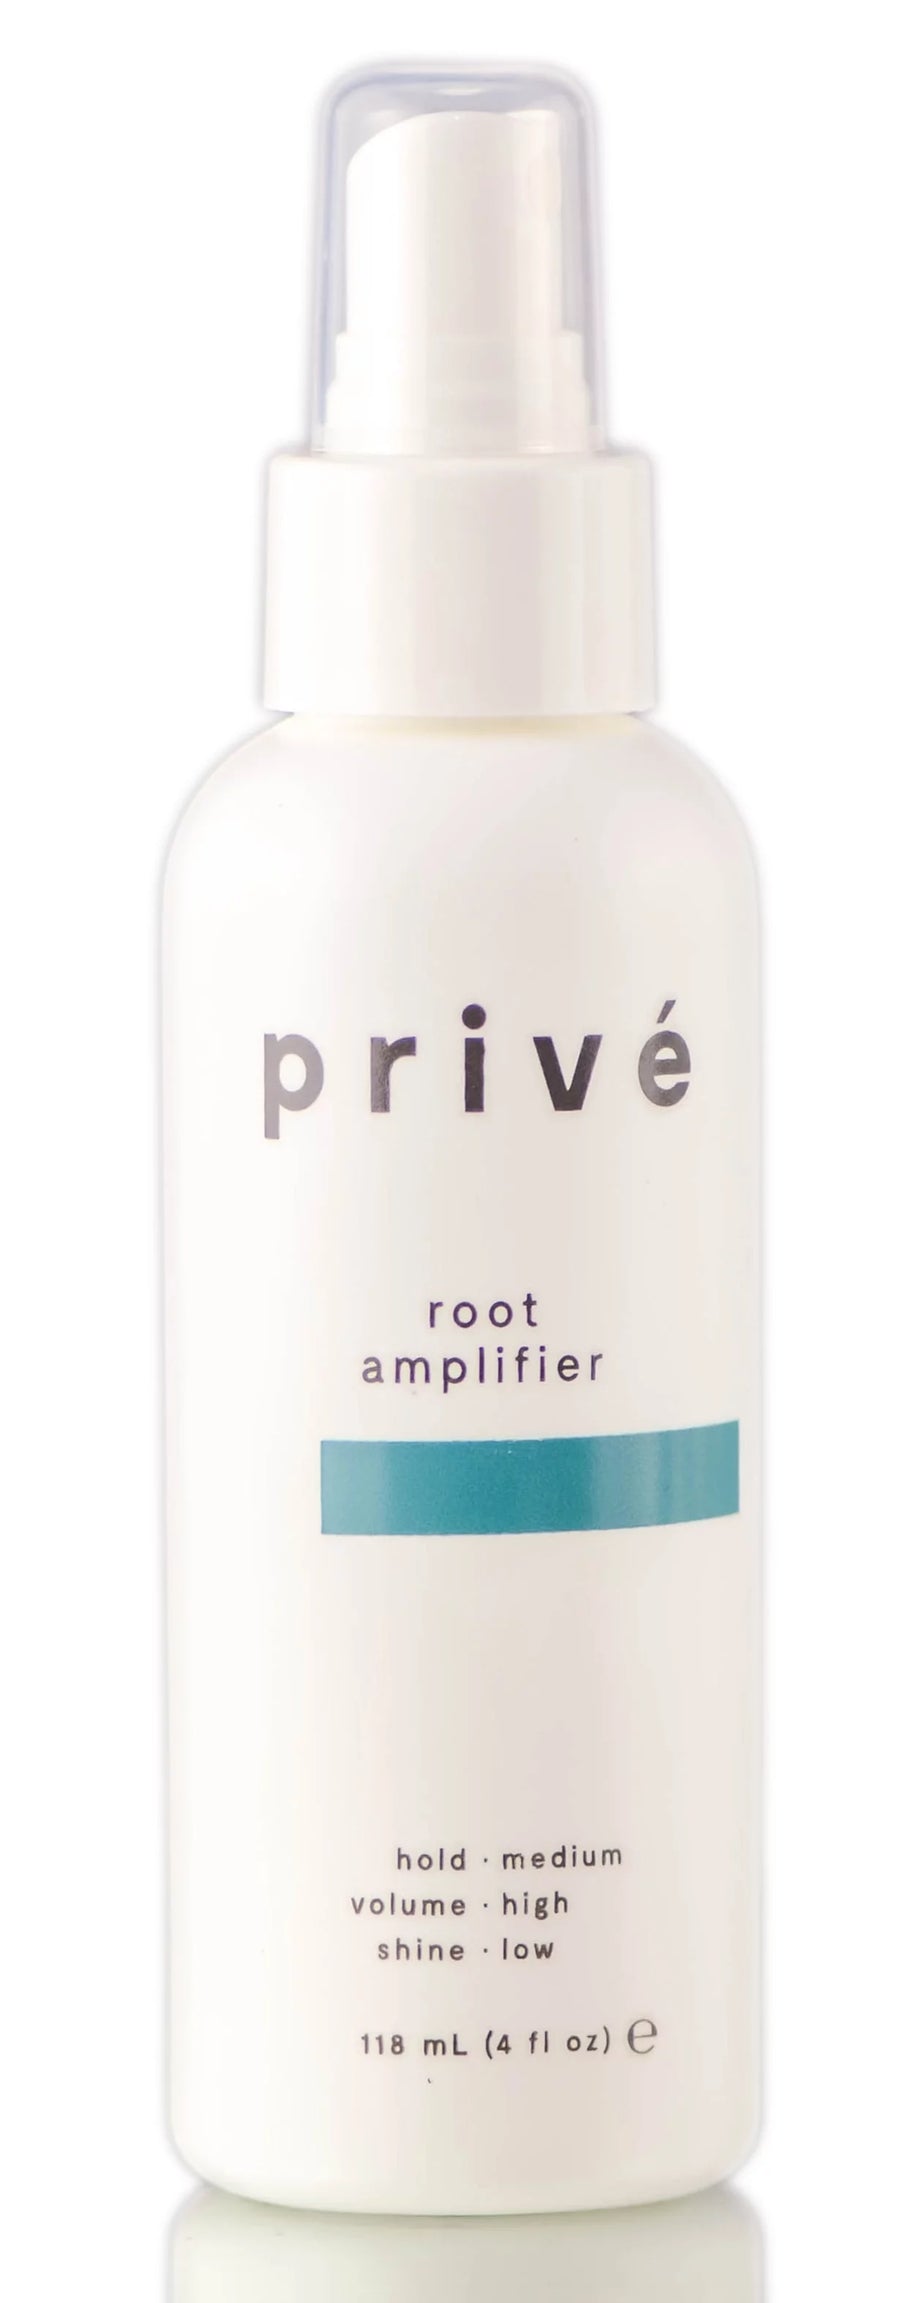 Prive Root Amplifier image of 4 oz bottle